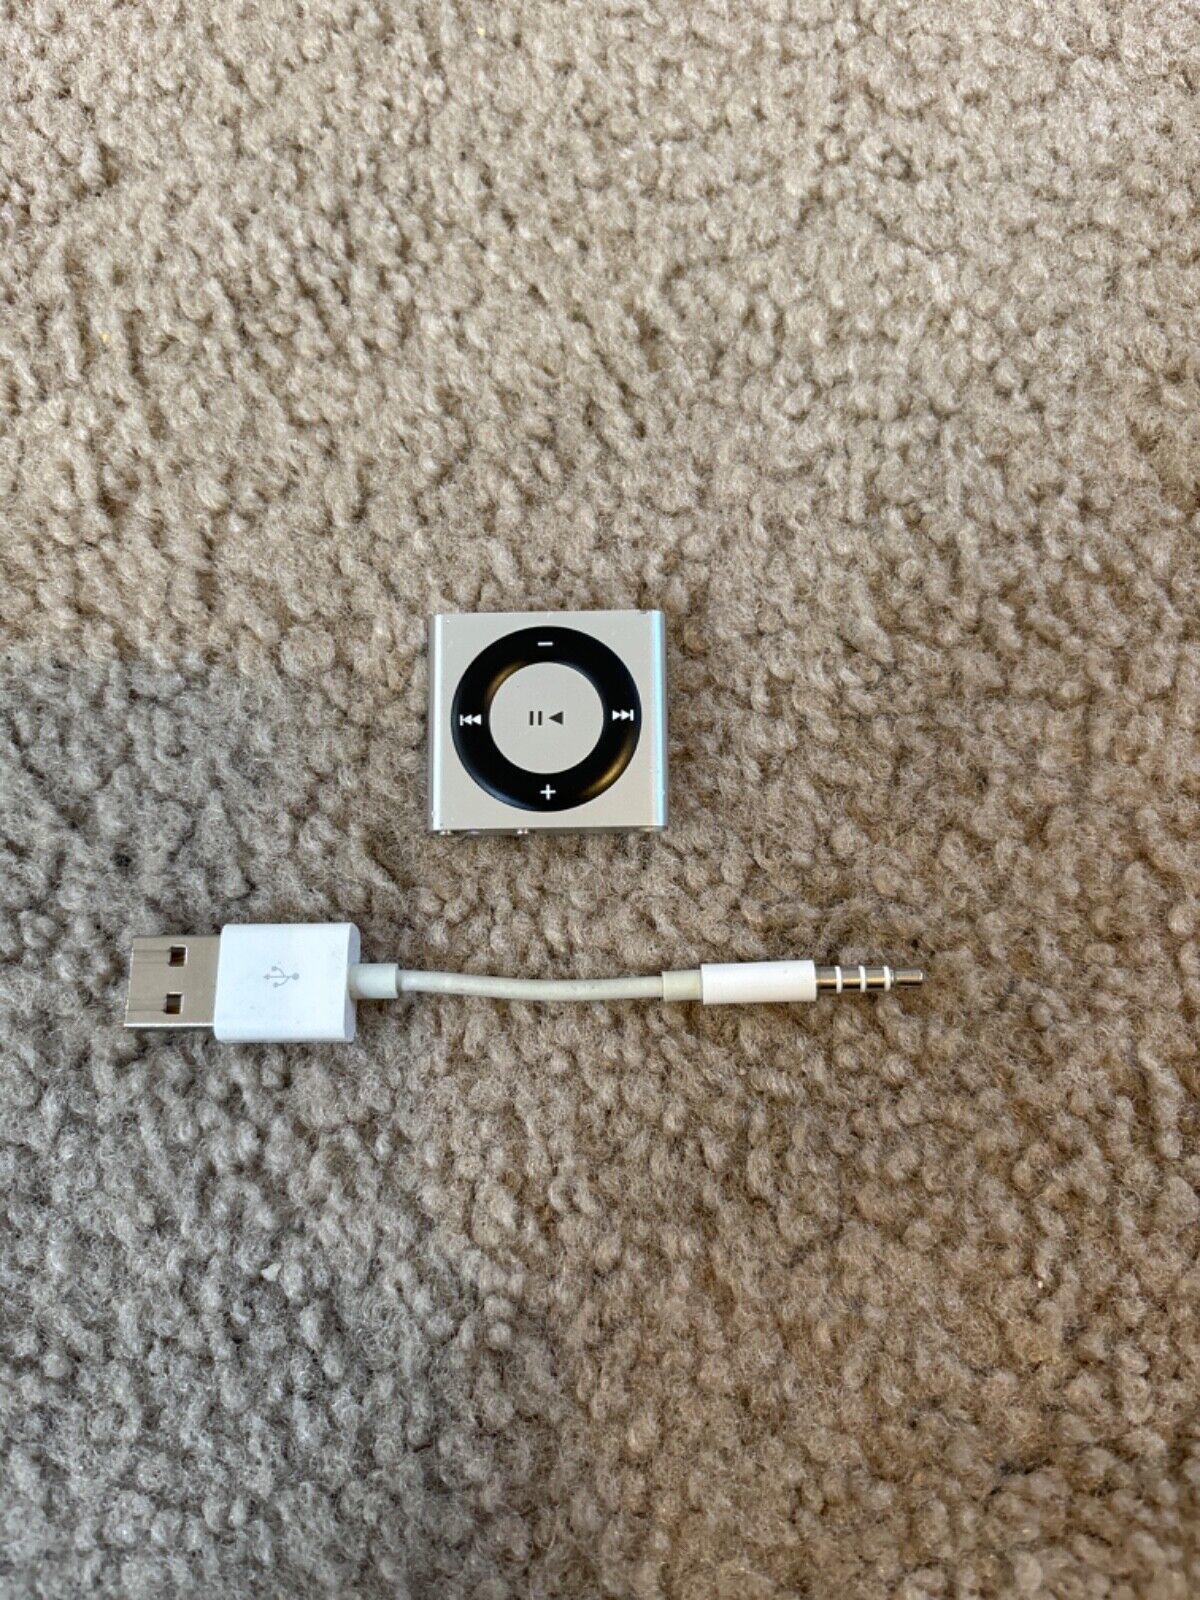 Apple iPod Shuffle 2GB Silver 4th Generation Model A1373 Full Battery, Works - $46.74